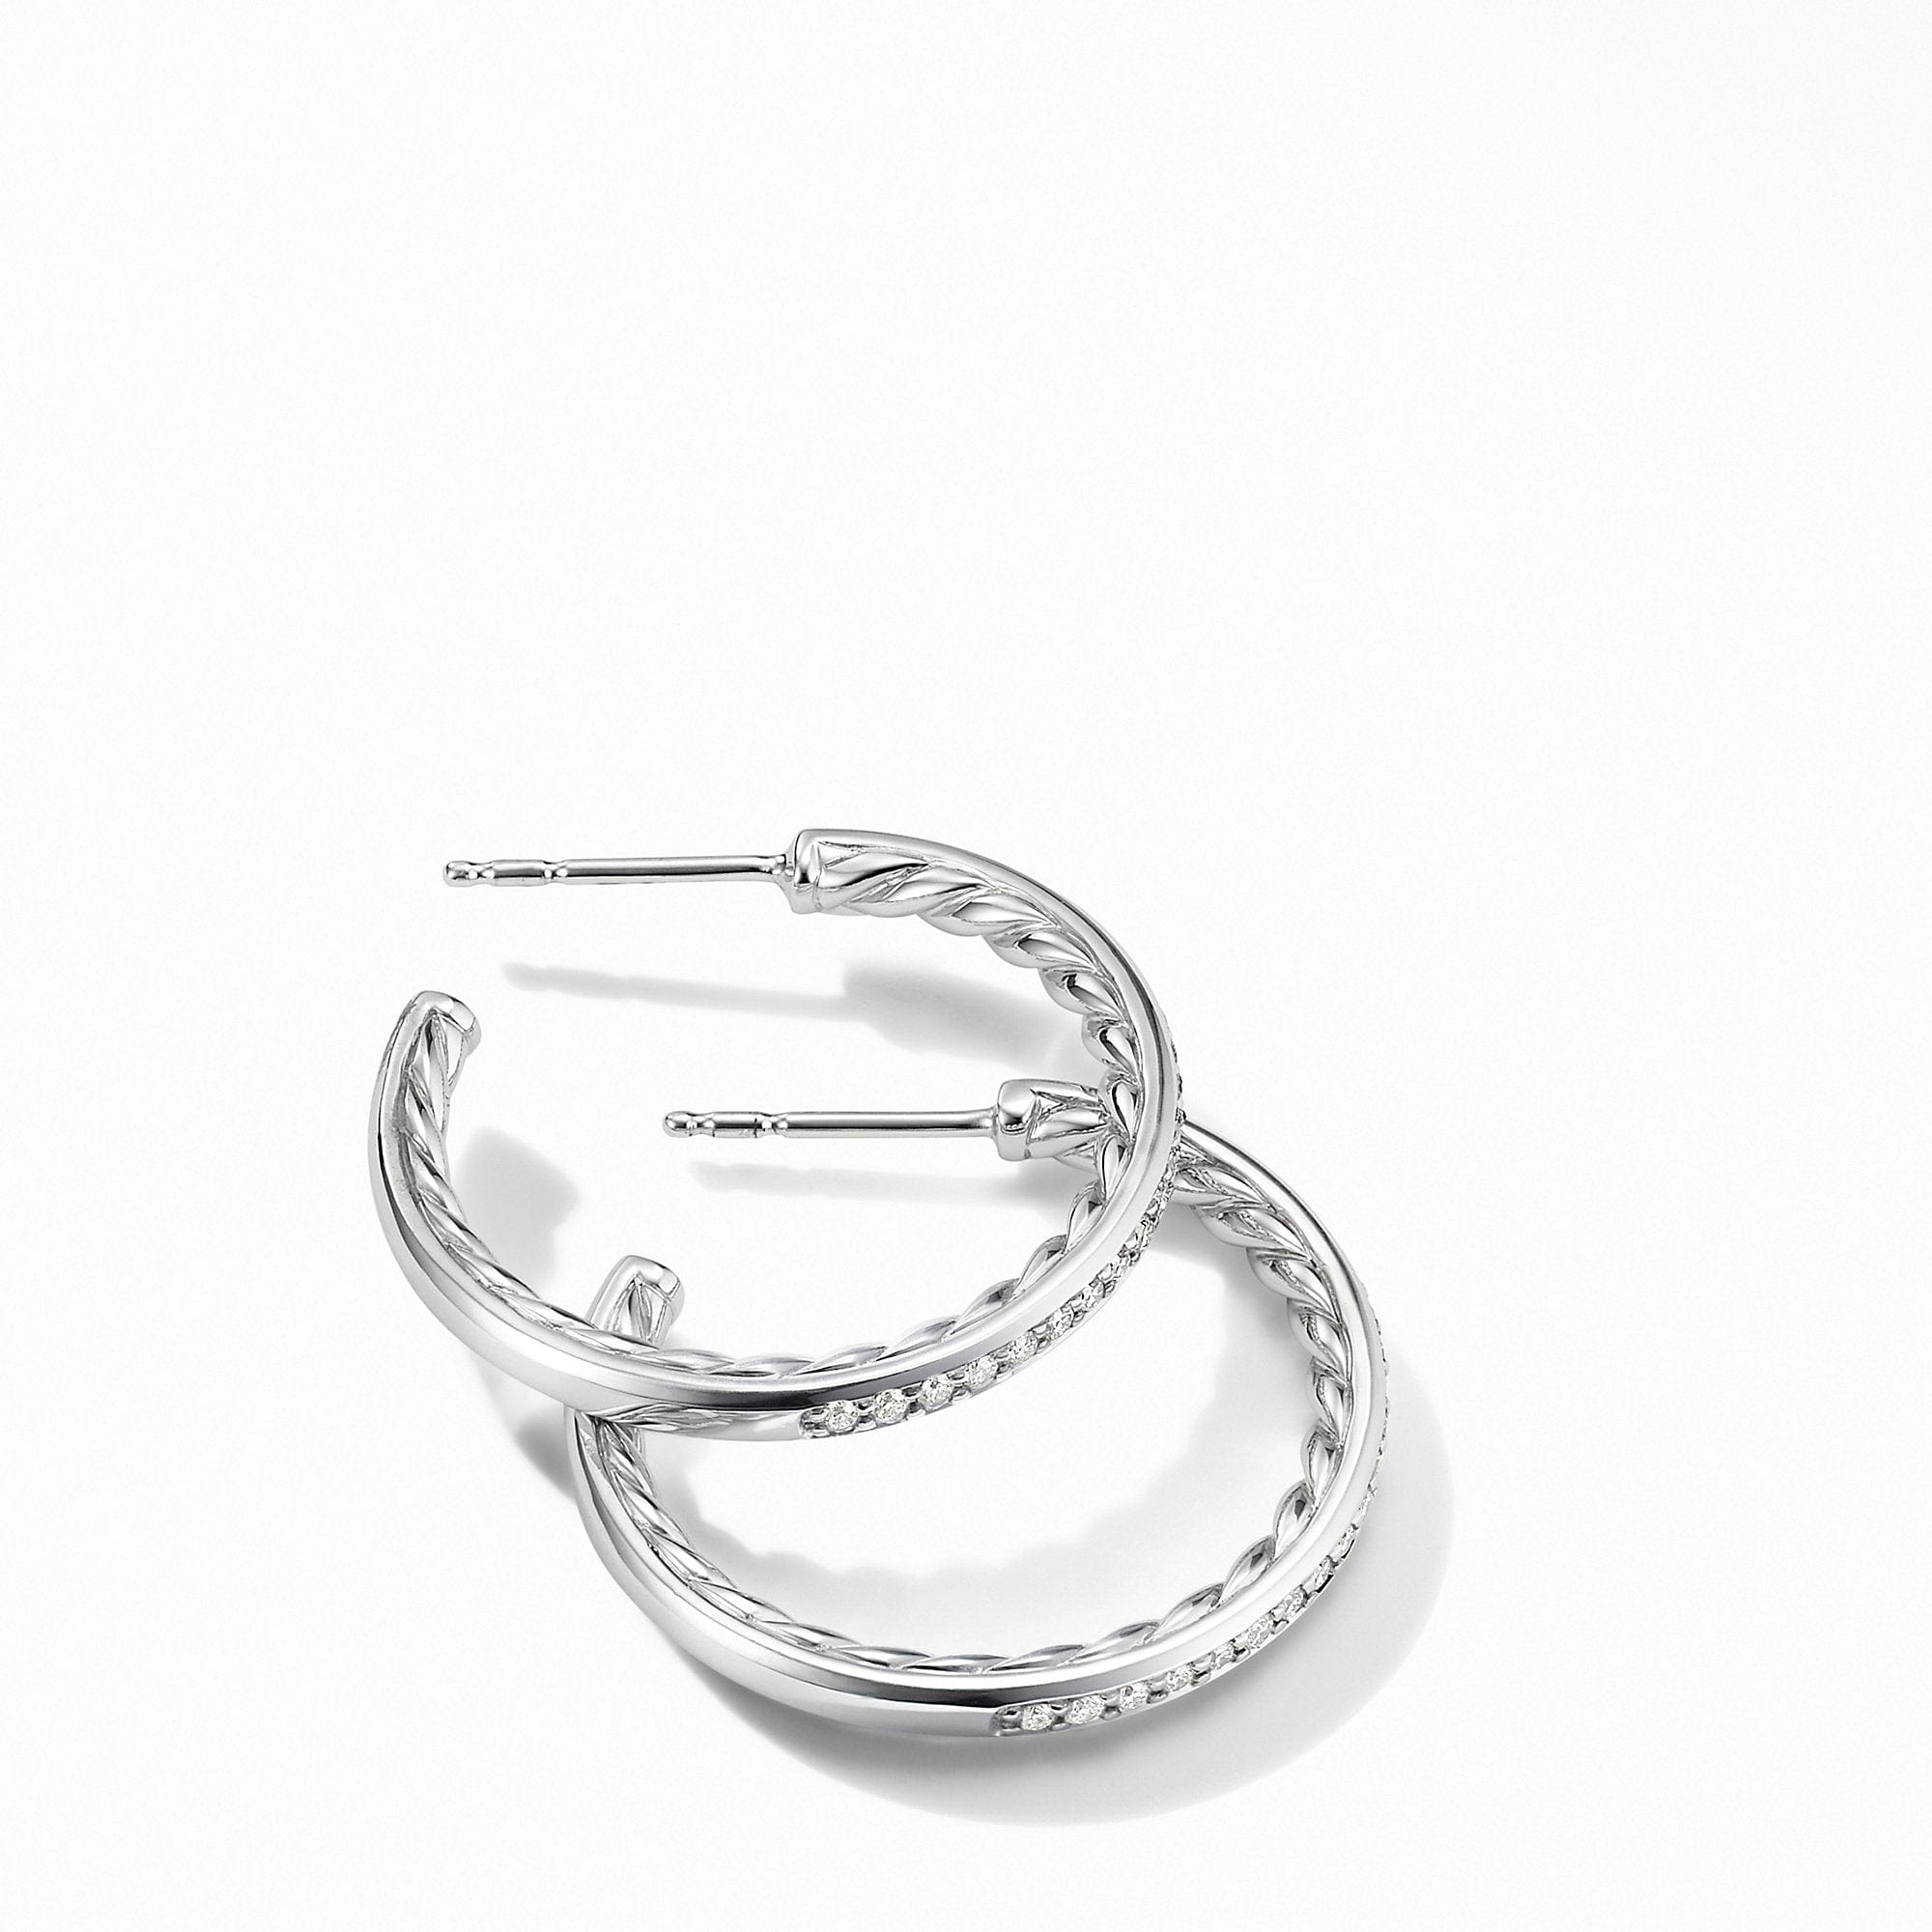 Small Hoop Earrings with Pavé Diamonds